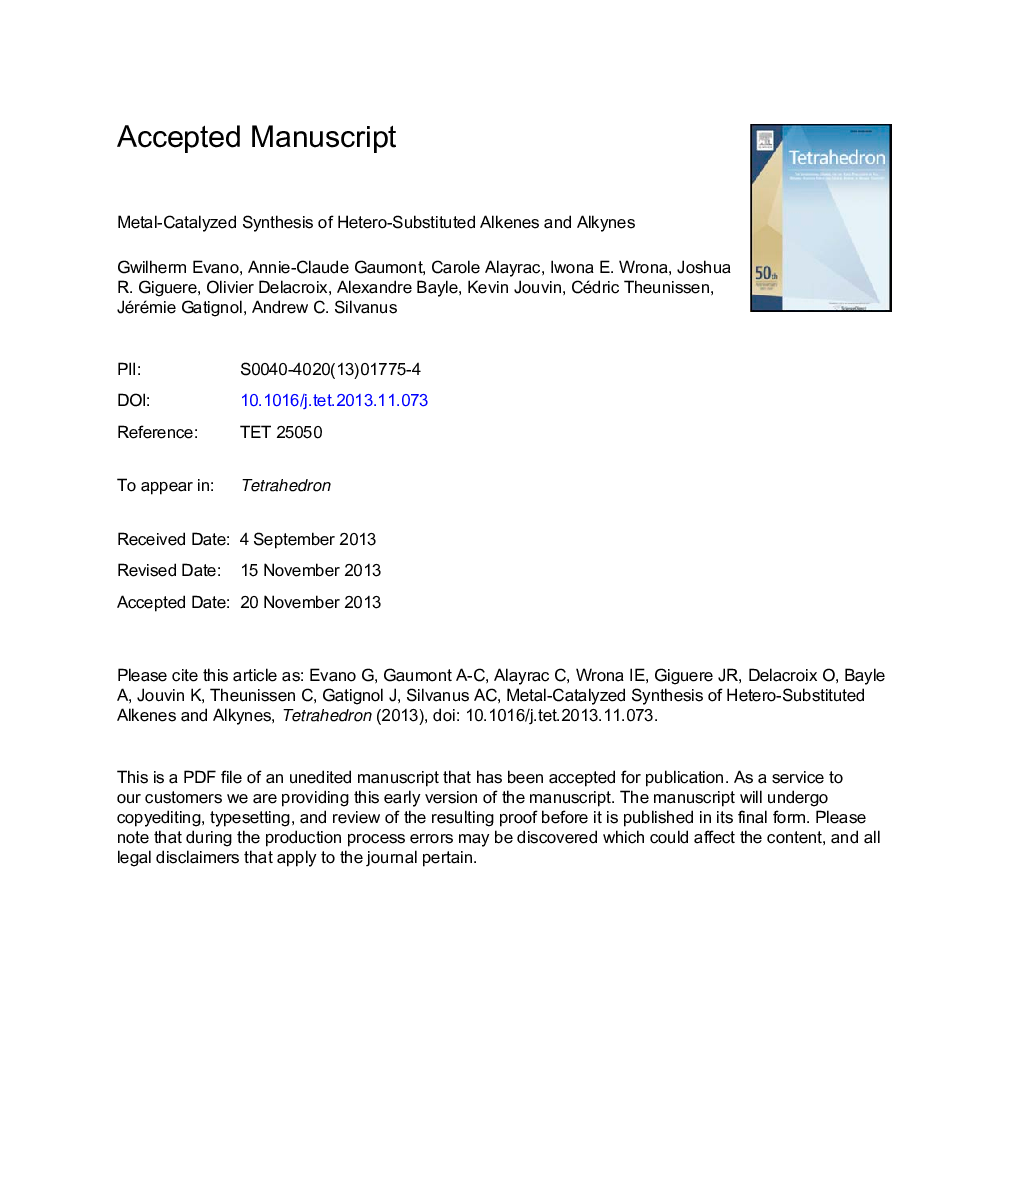 Metal-catalyzed synthesis of hetero-substituted alkenes and alkynes